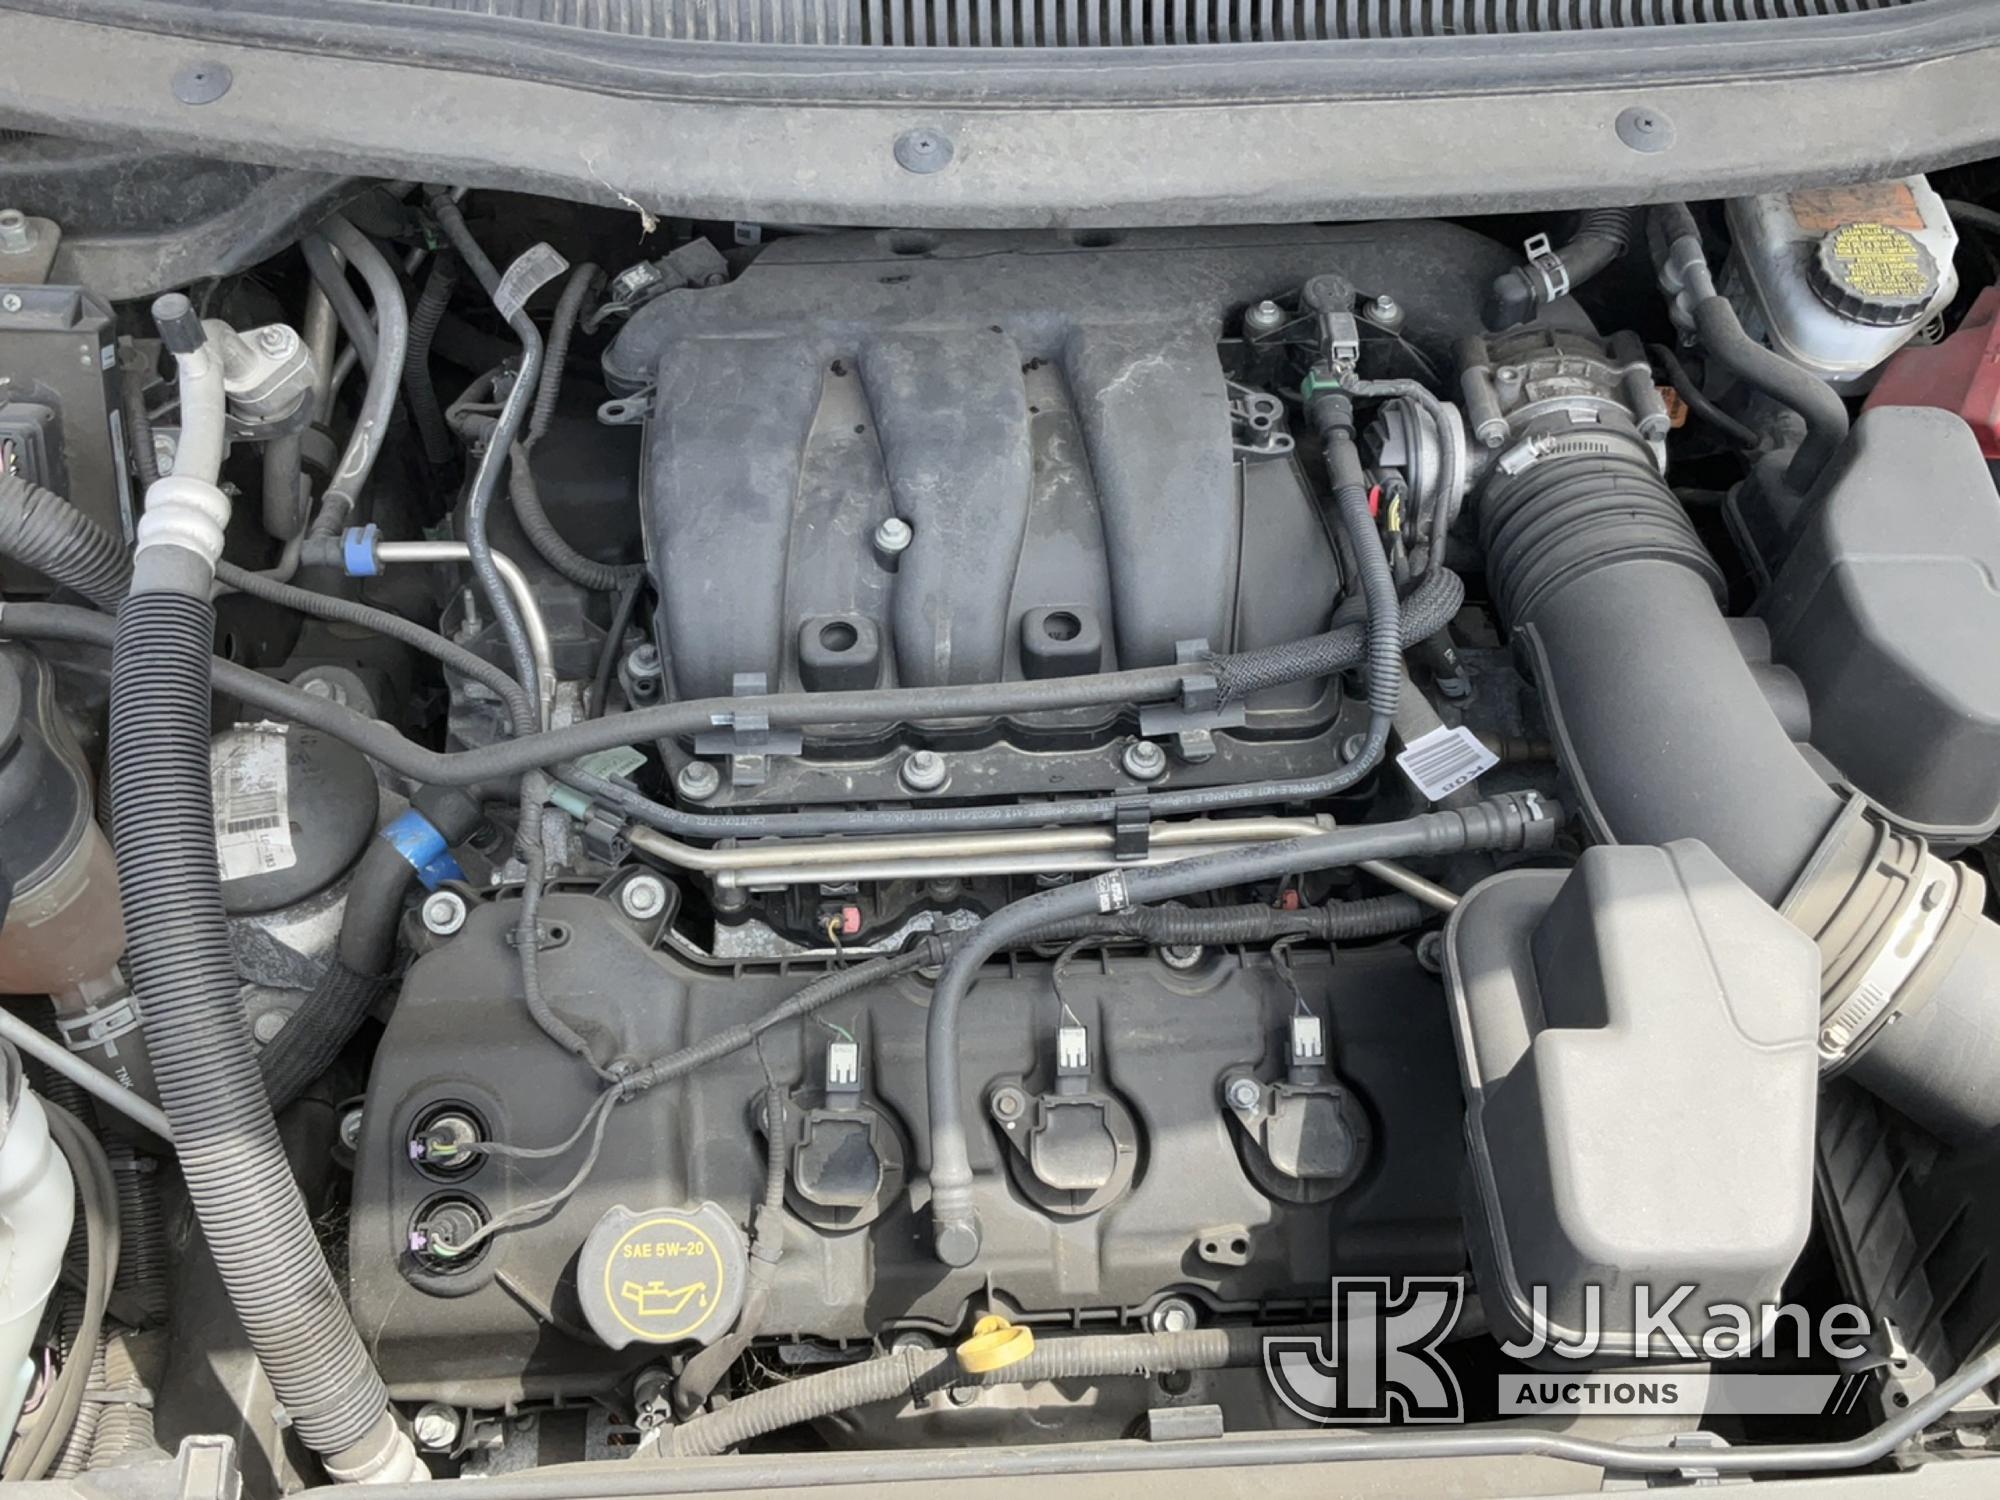 (Jurupa Valley, CA) 2017 Ford Explorer 4-Door Sport Utility Vehicle Not Running , No Key, Stripped O